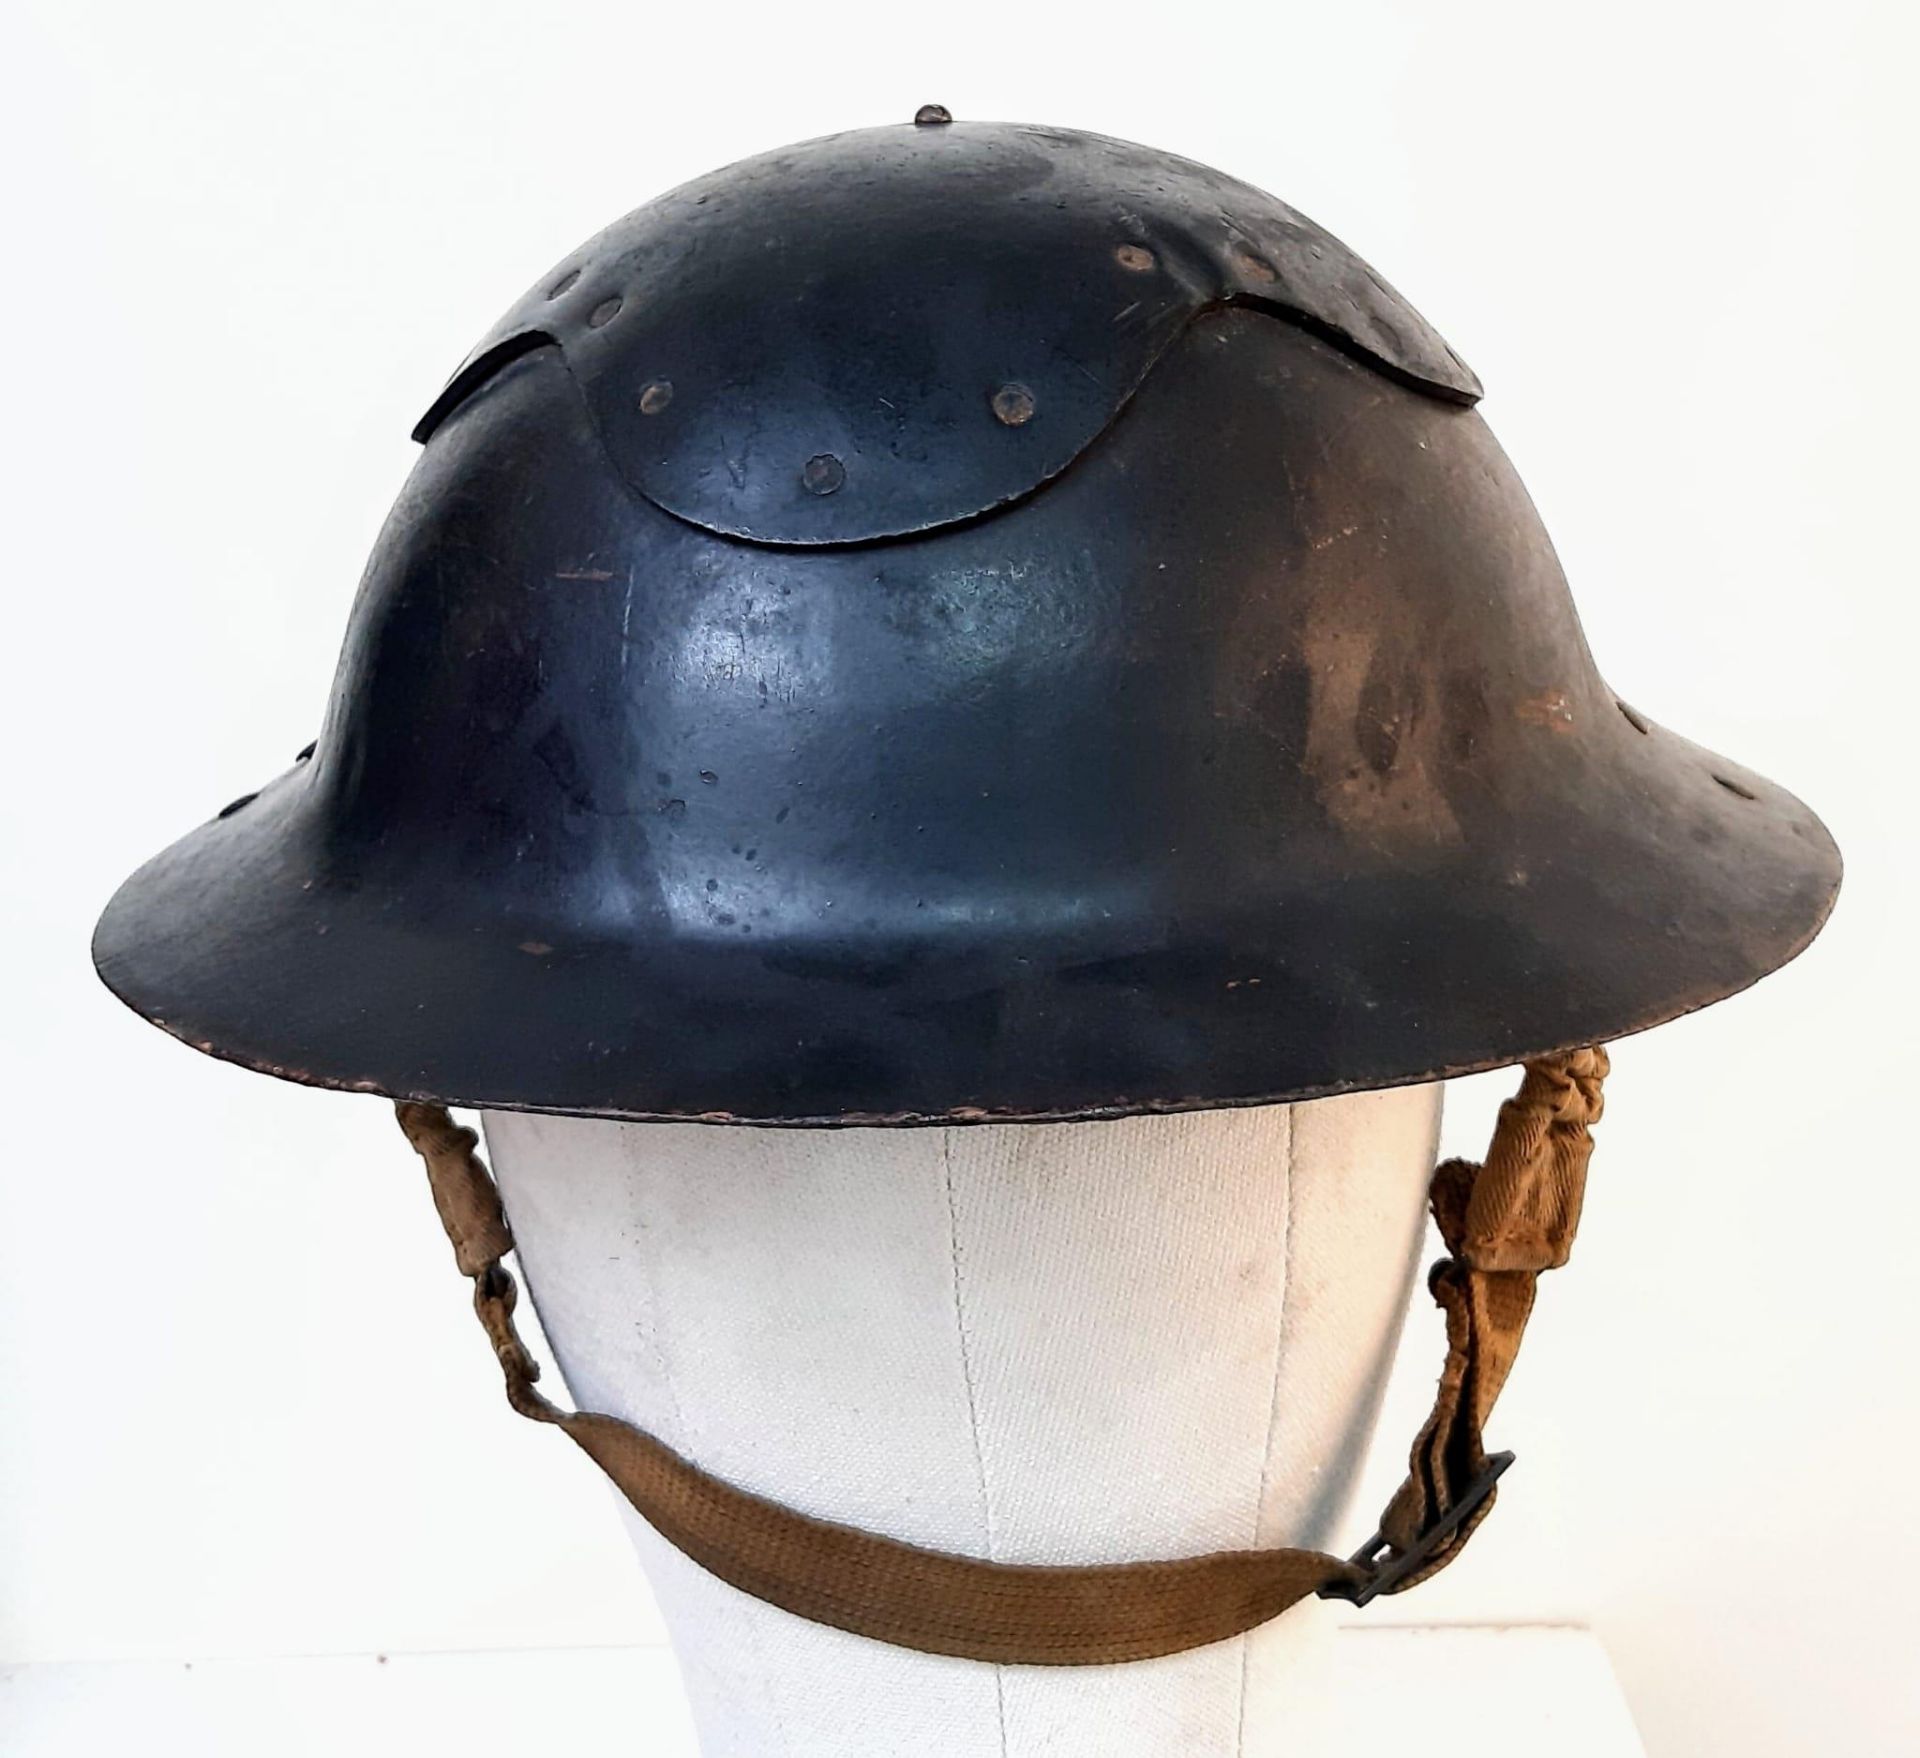 Scarce WW2 British Home Front “Cromwell” Helmet. A lightweight private purchase Fiber helmet